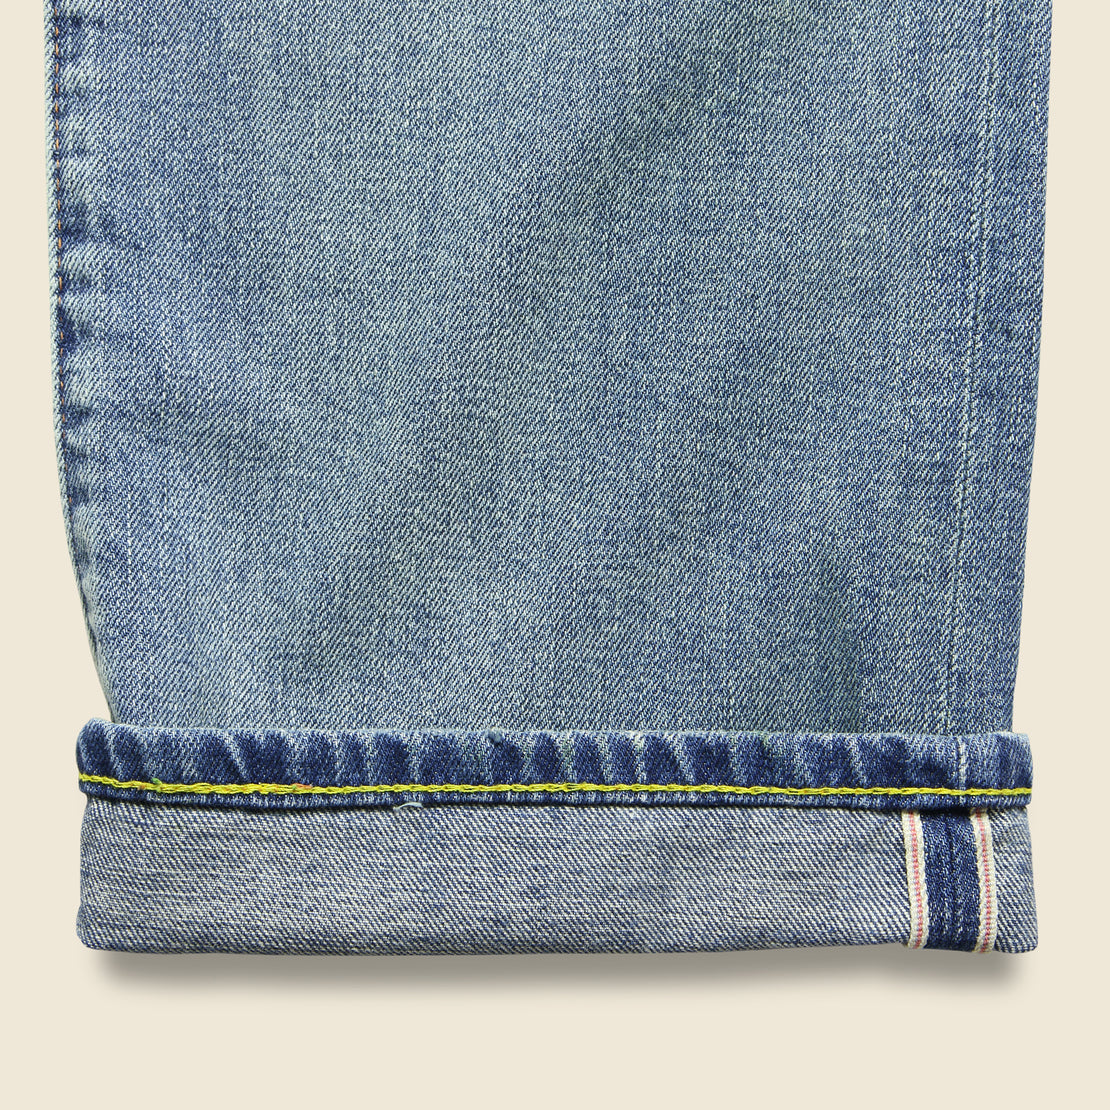 1950s 701 Jean - Del Mar Wash - Levis Vintage Clothing - STAG Provisions - W - Pants - Denim